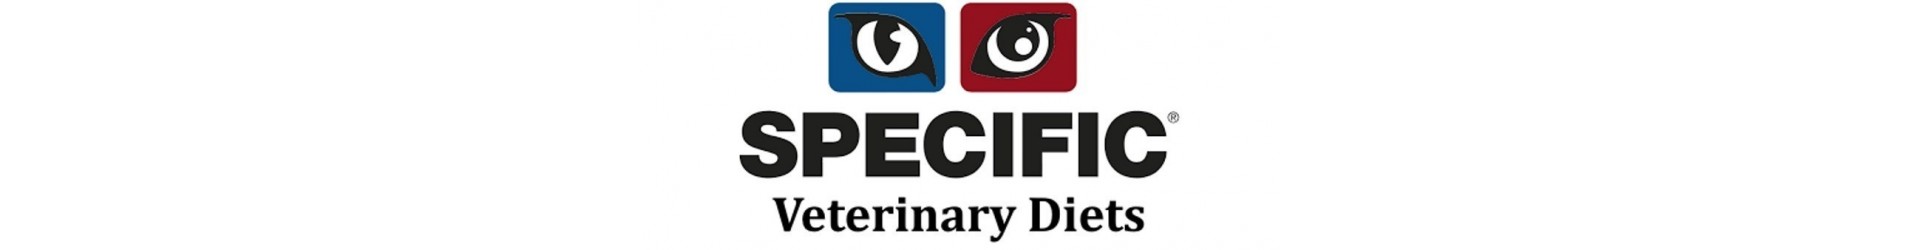 Specific Veterinary Diets